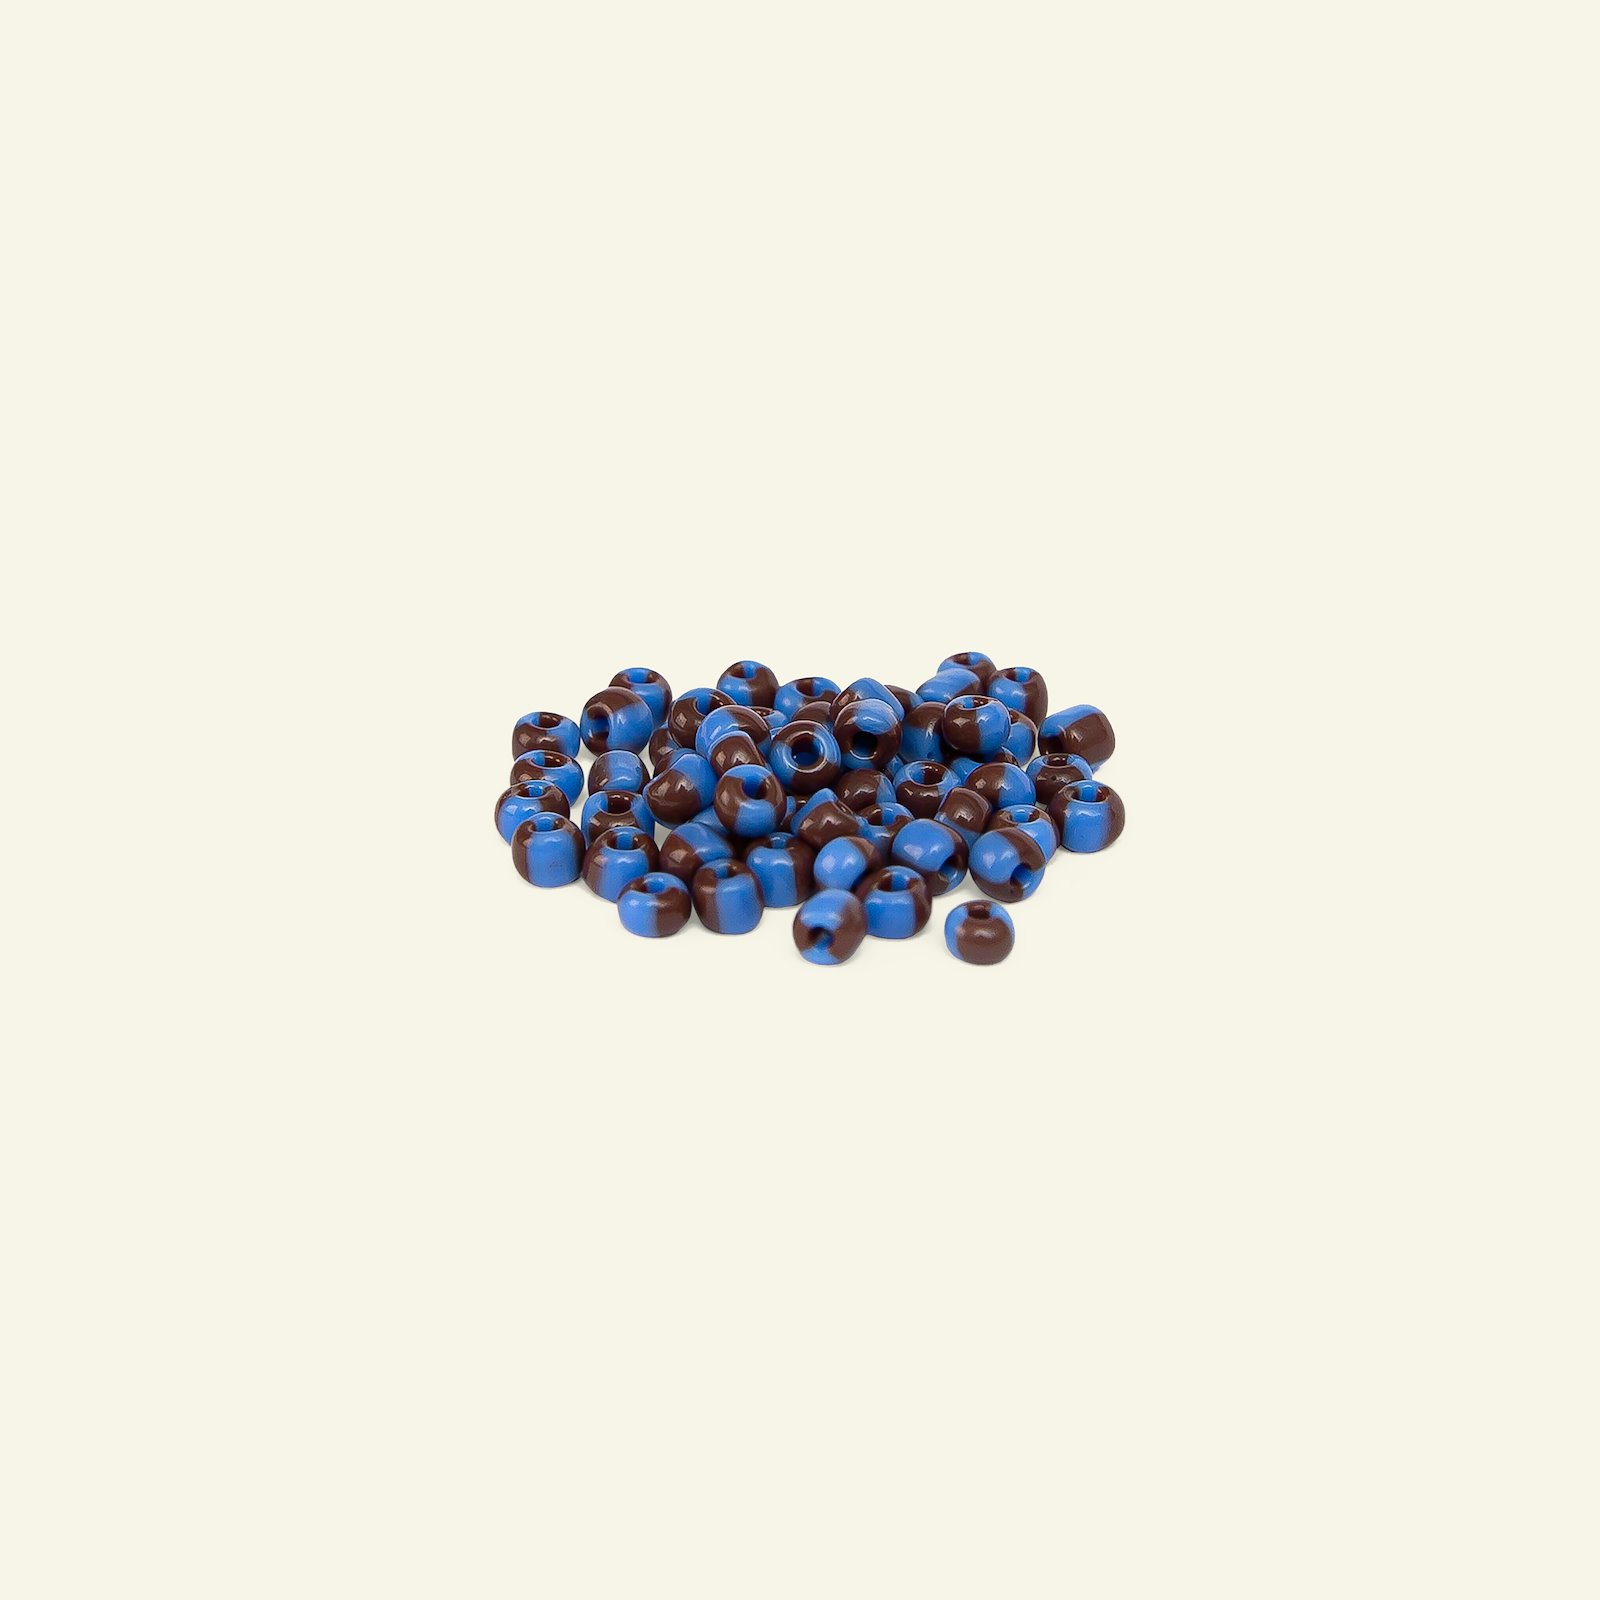 Matsuno glaspärla 8/0 blå/brun 10g 47128_pack_b